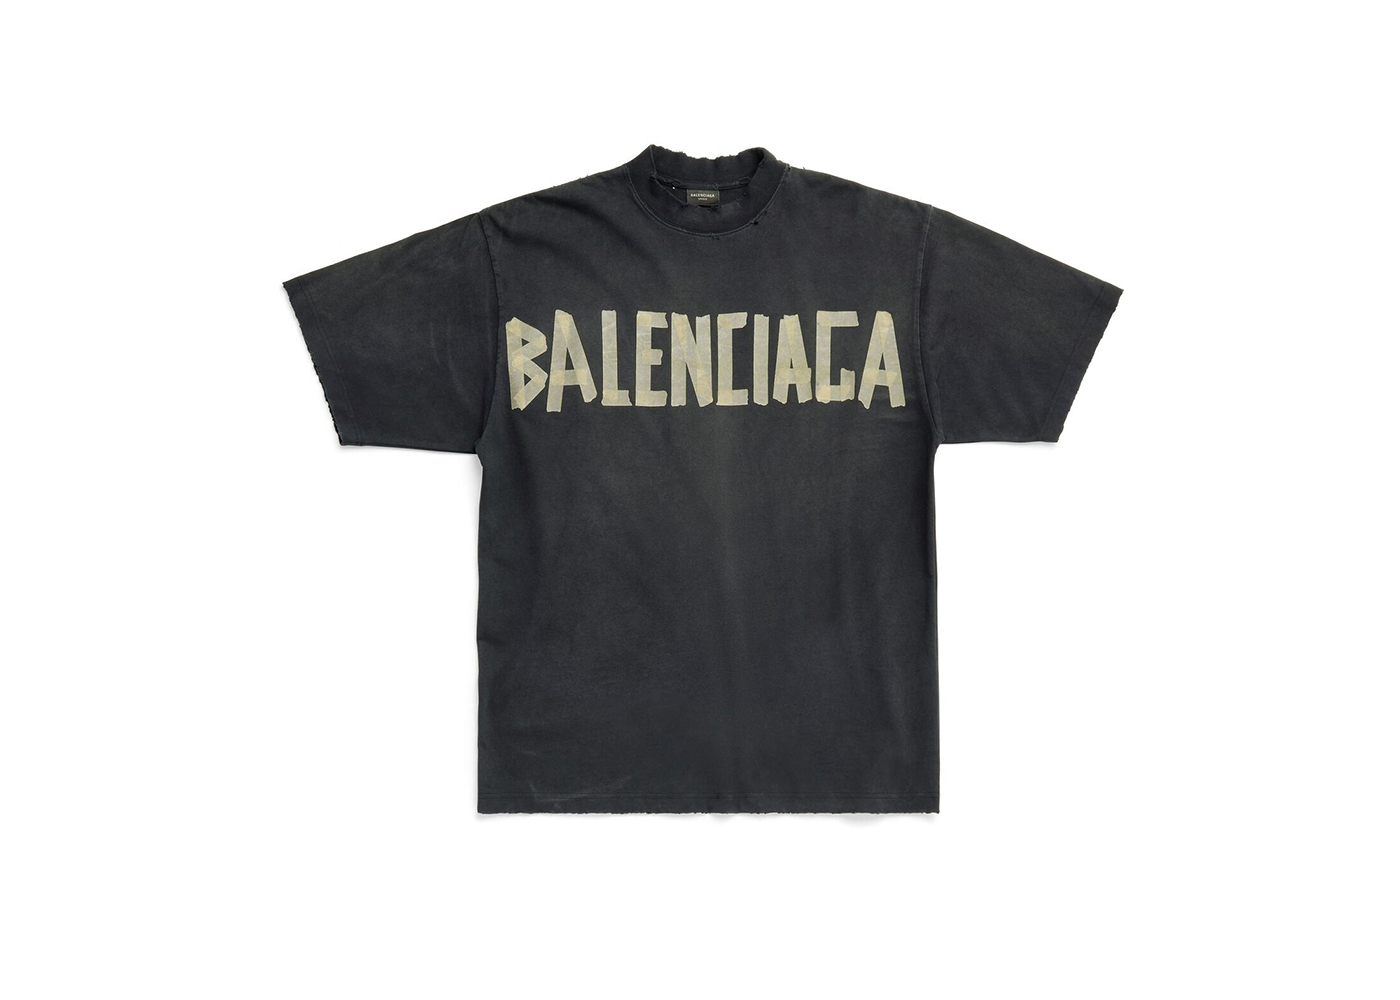 Balenciaga Mens TShirts for sale  eBay